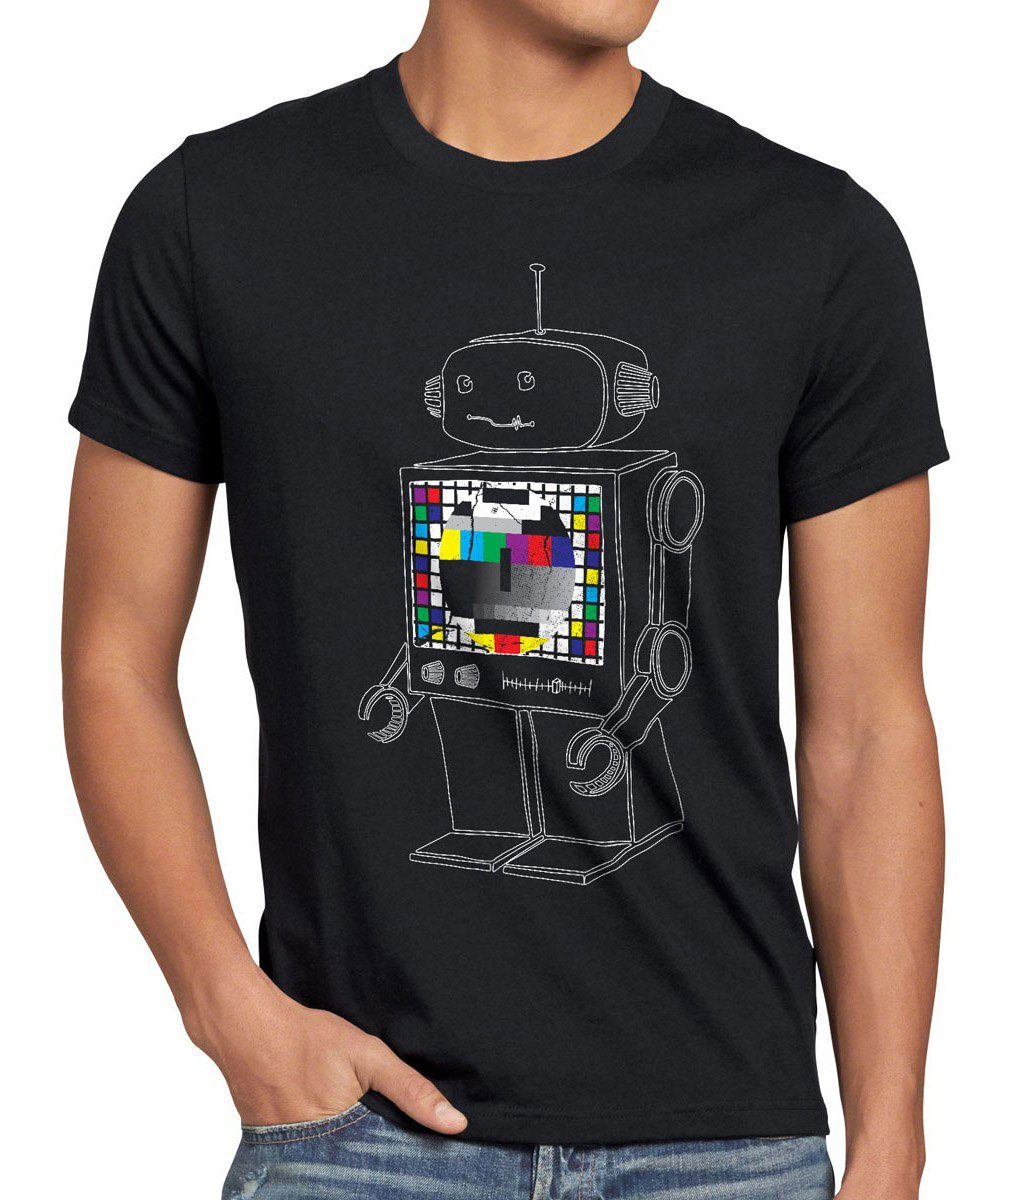 Testbild Sheldon Monitor Roboter Print-Shirt Herren cooper TV Bang Robot Big T-Shirt style3 schwarz theory